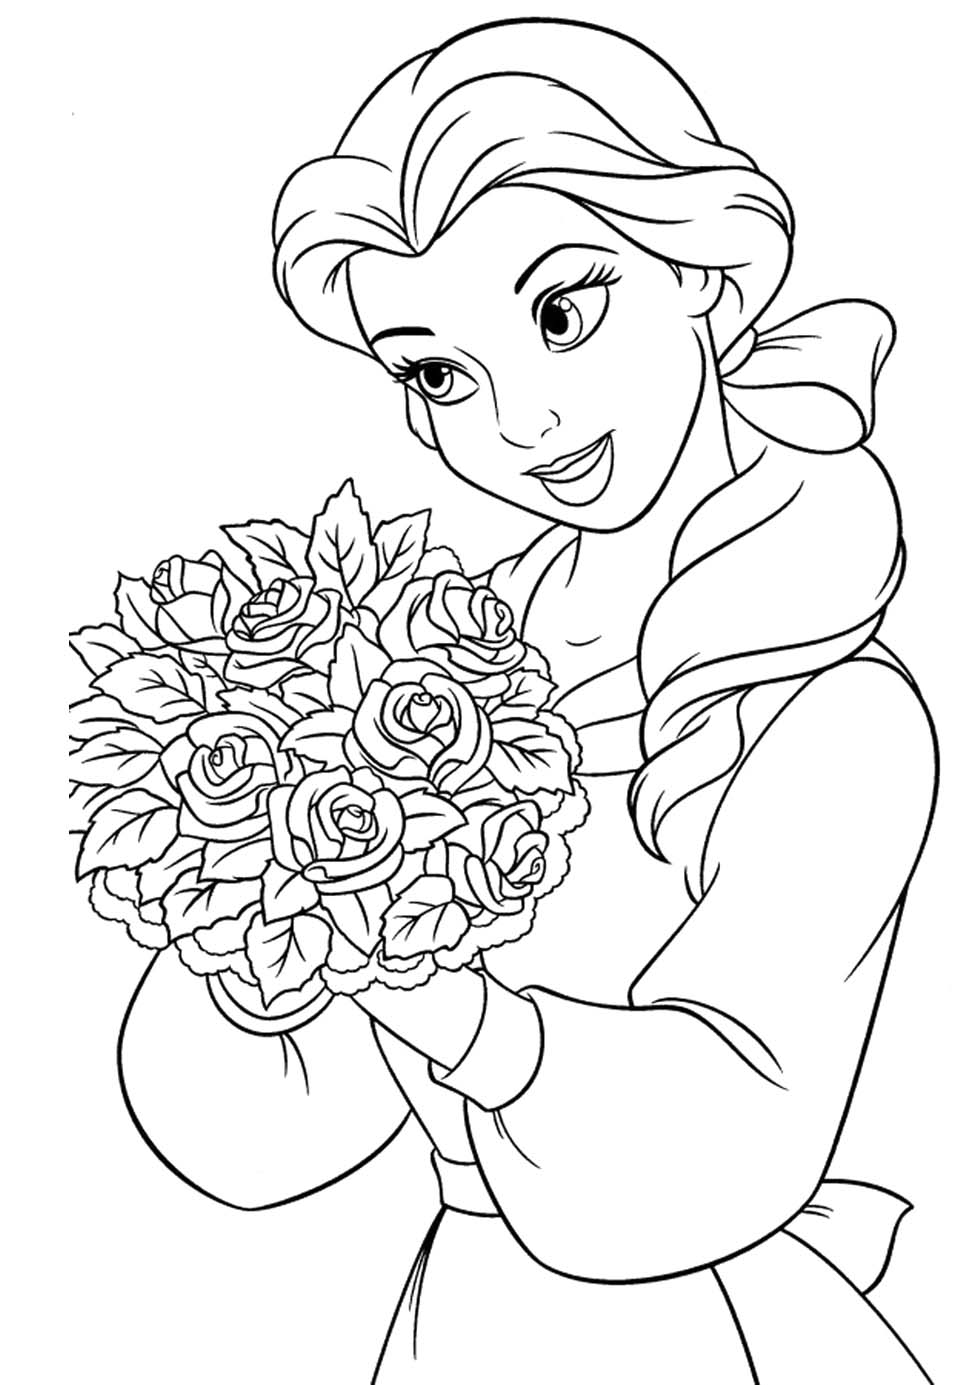 Disney Princess Belle Drawing at GetDrawings | Free download